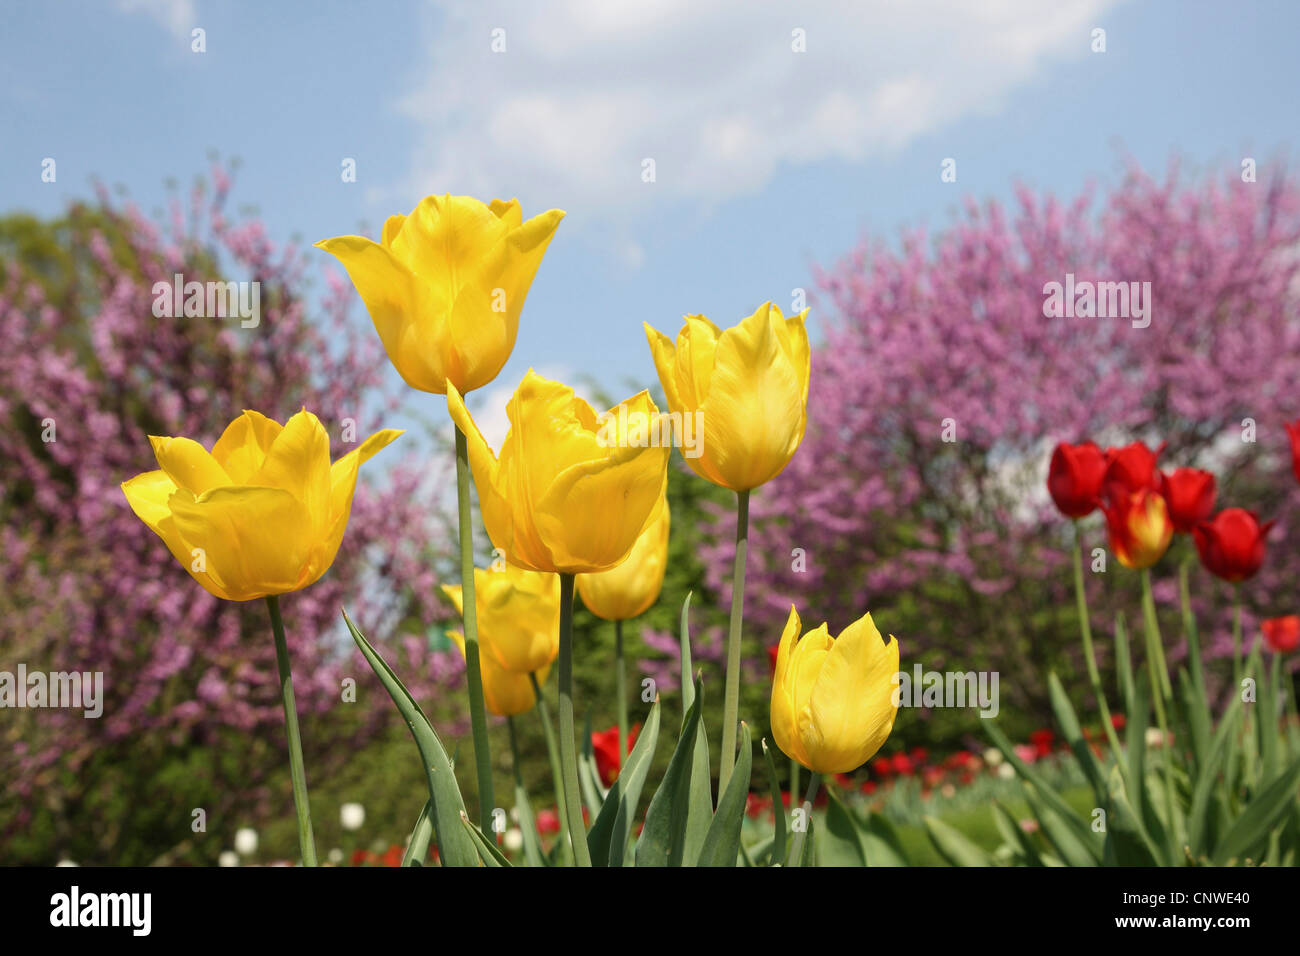 common garden tulip (Tulipa gesneriana), yellow flowers Stock Photo